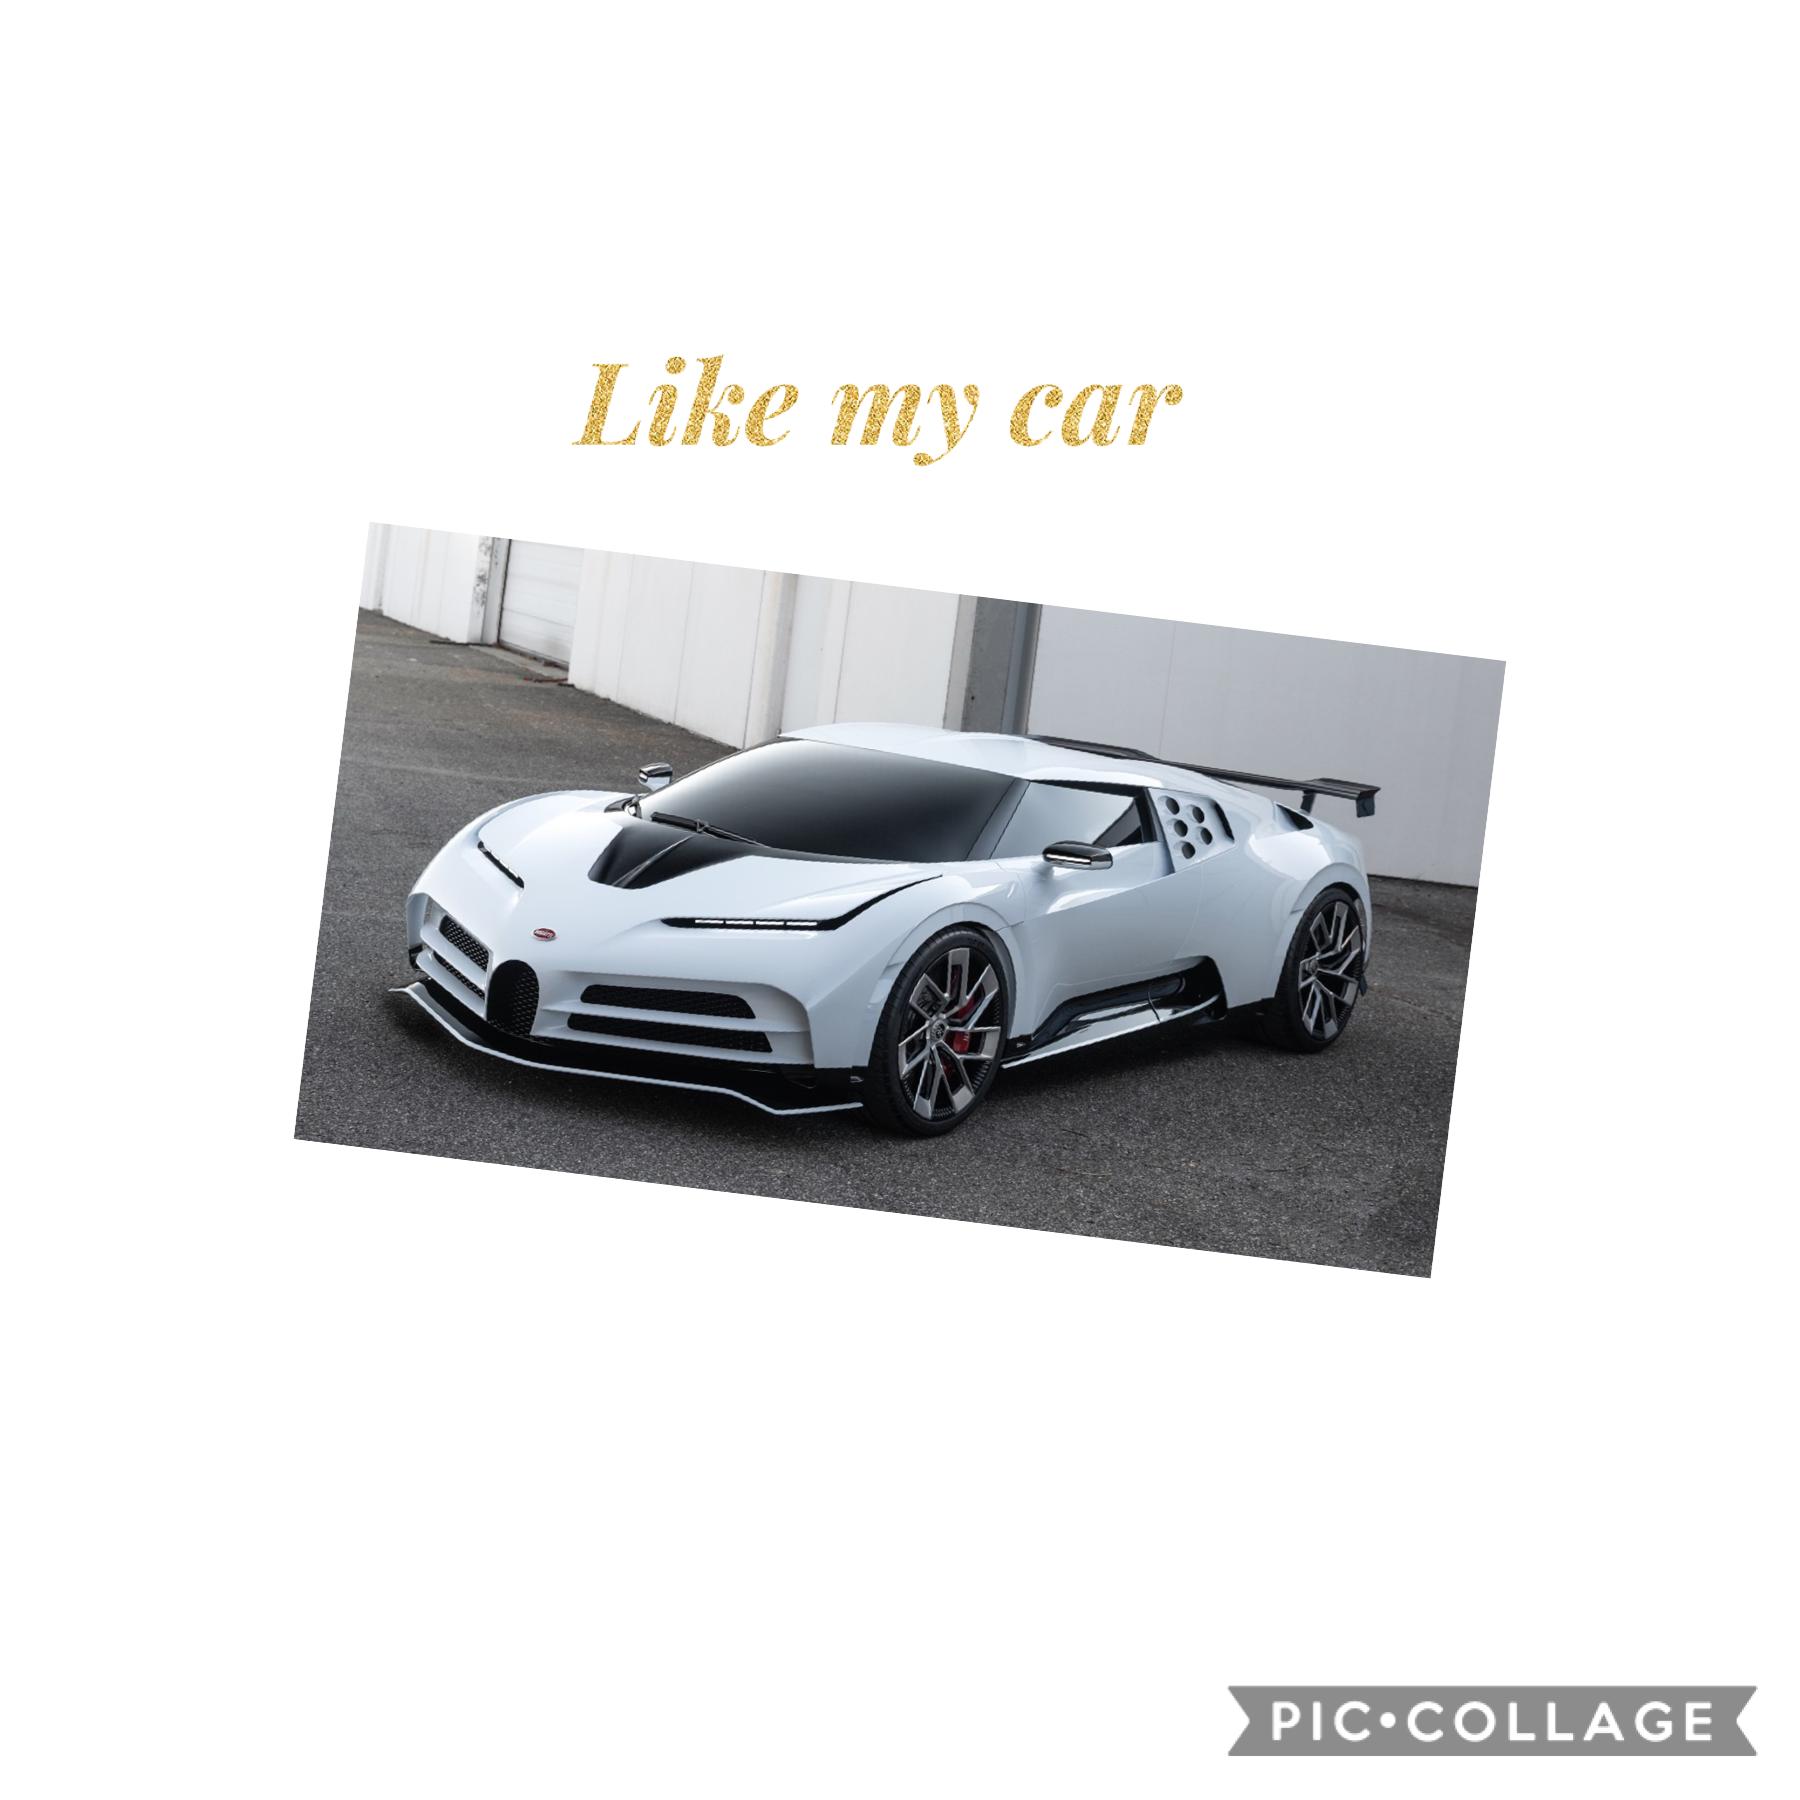 Like my car 